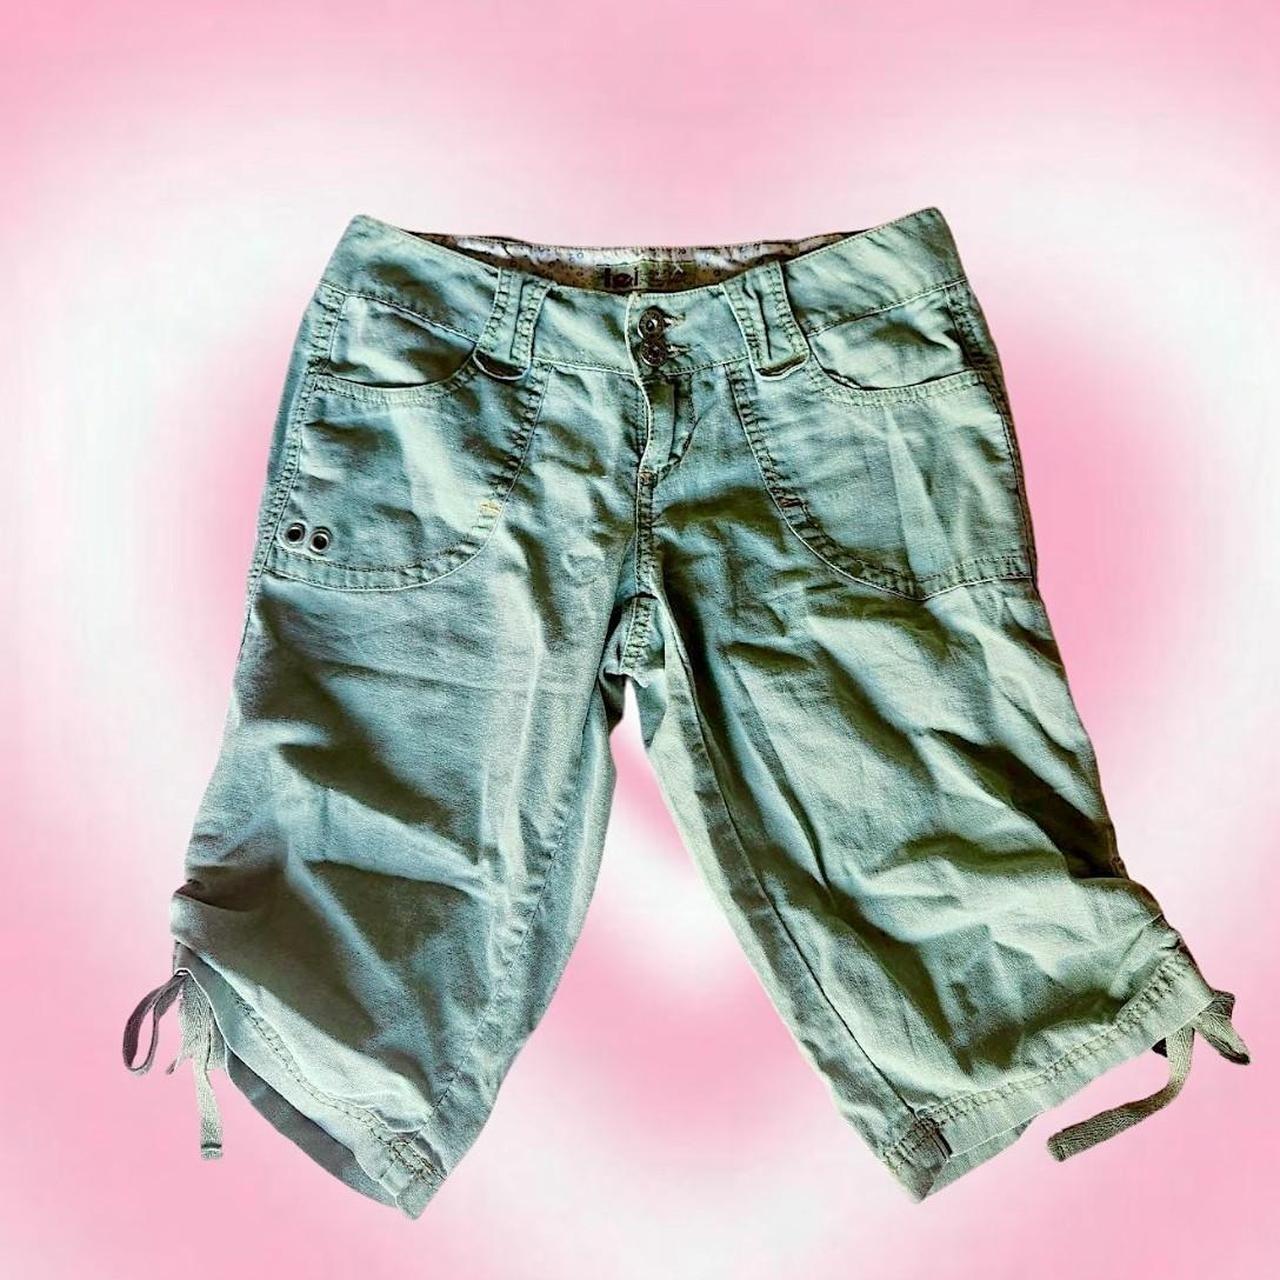 Low Waist Cargo Shorts - Khaki green - Ladies